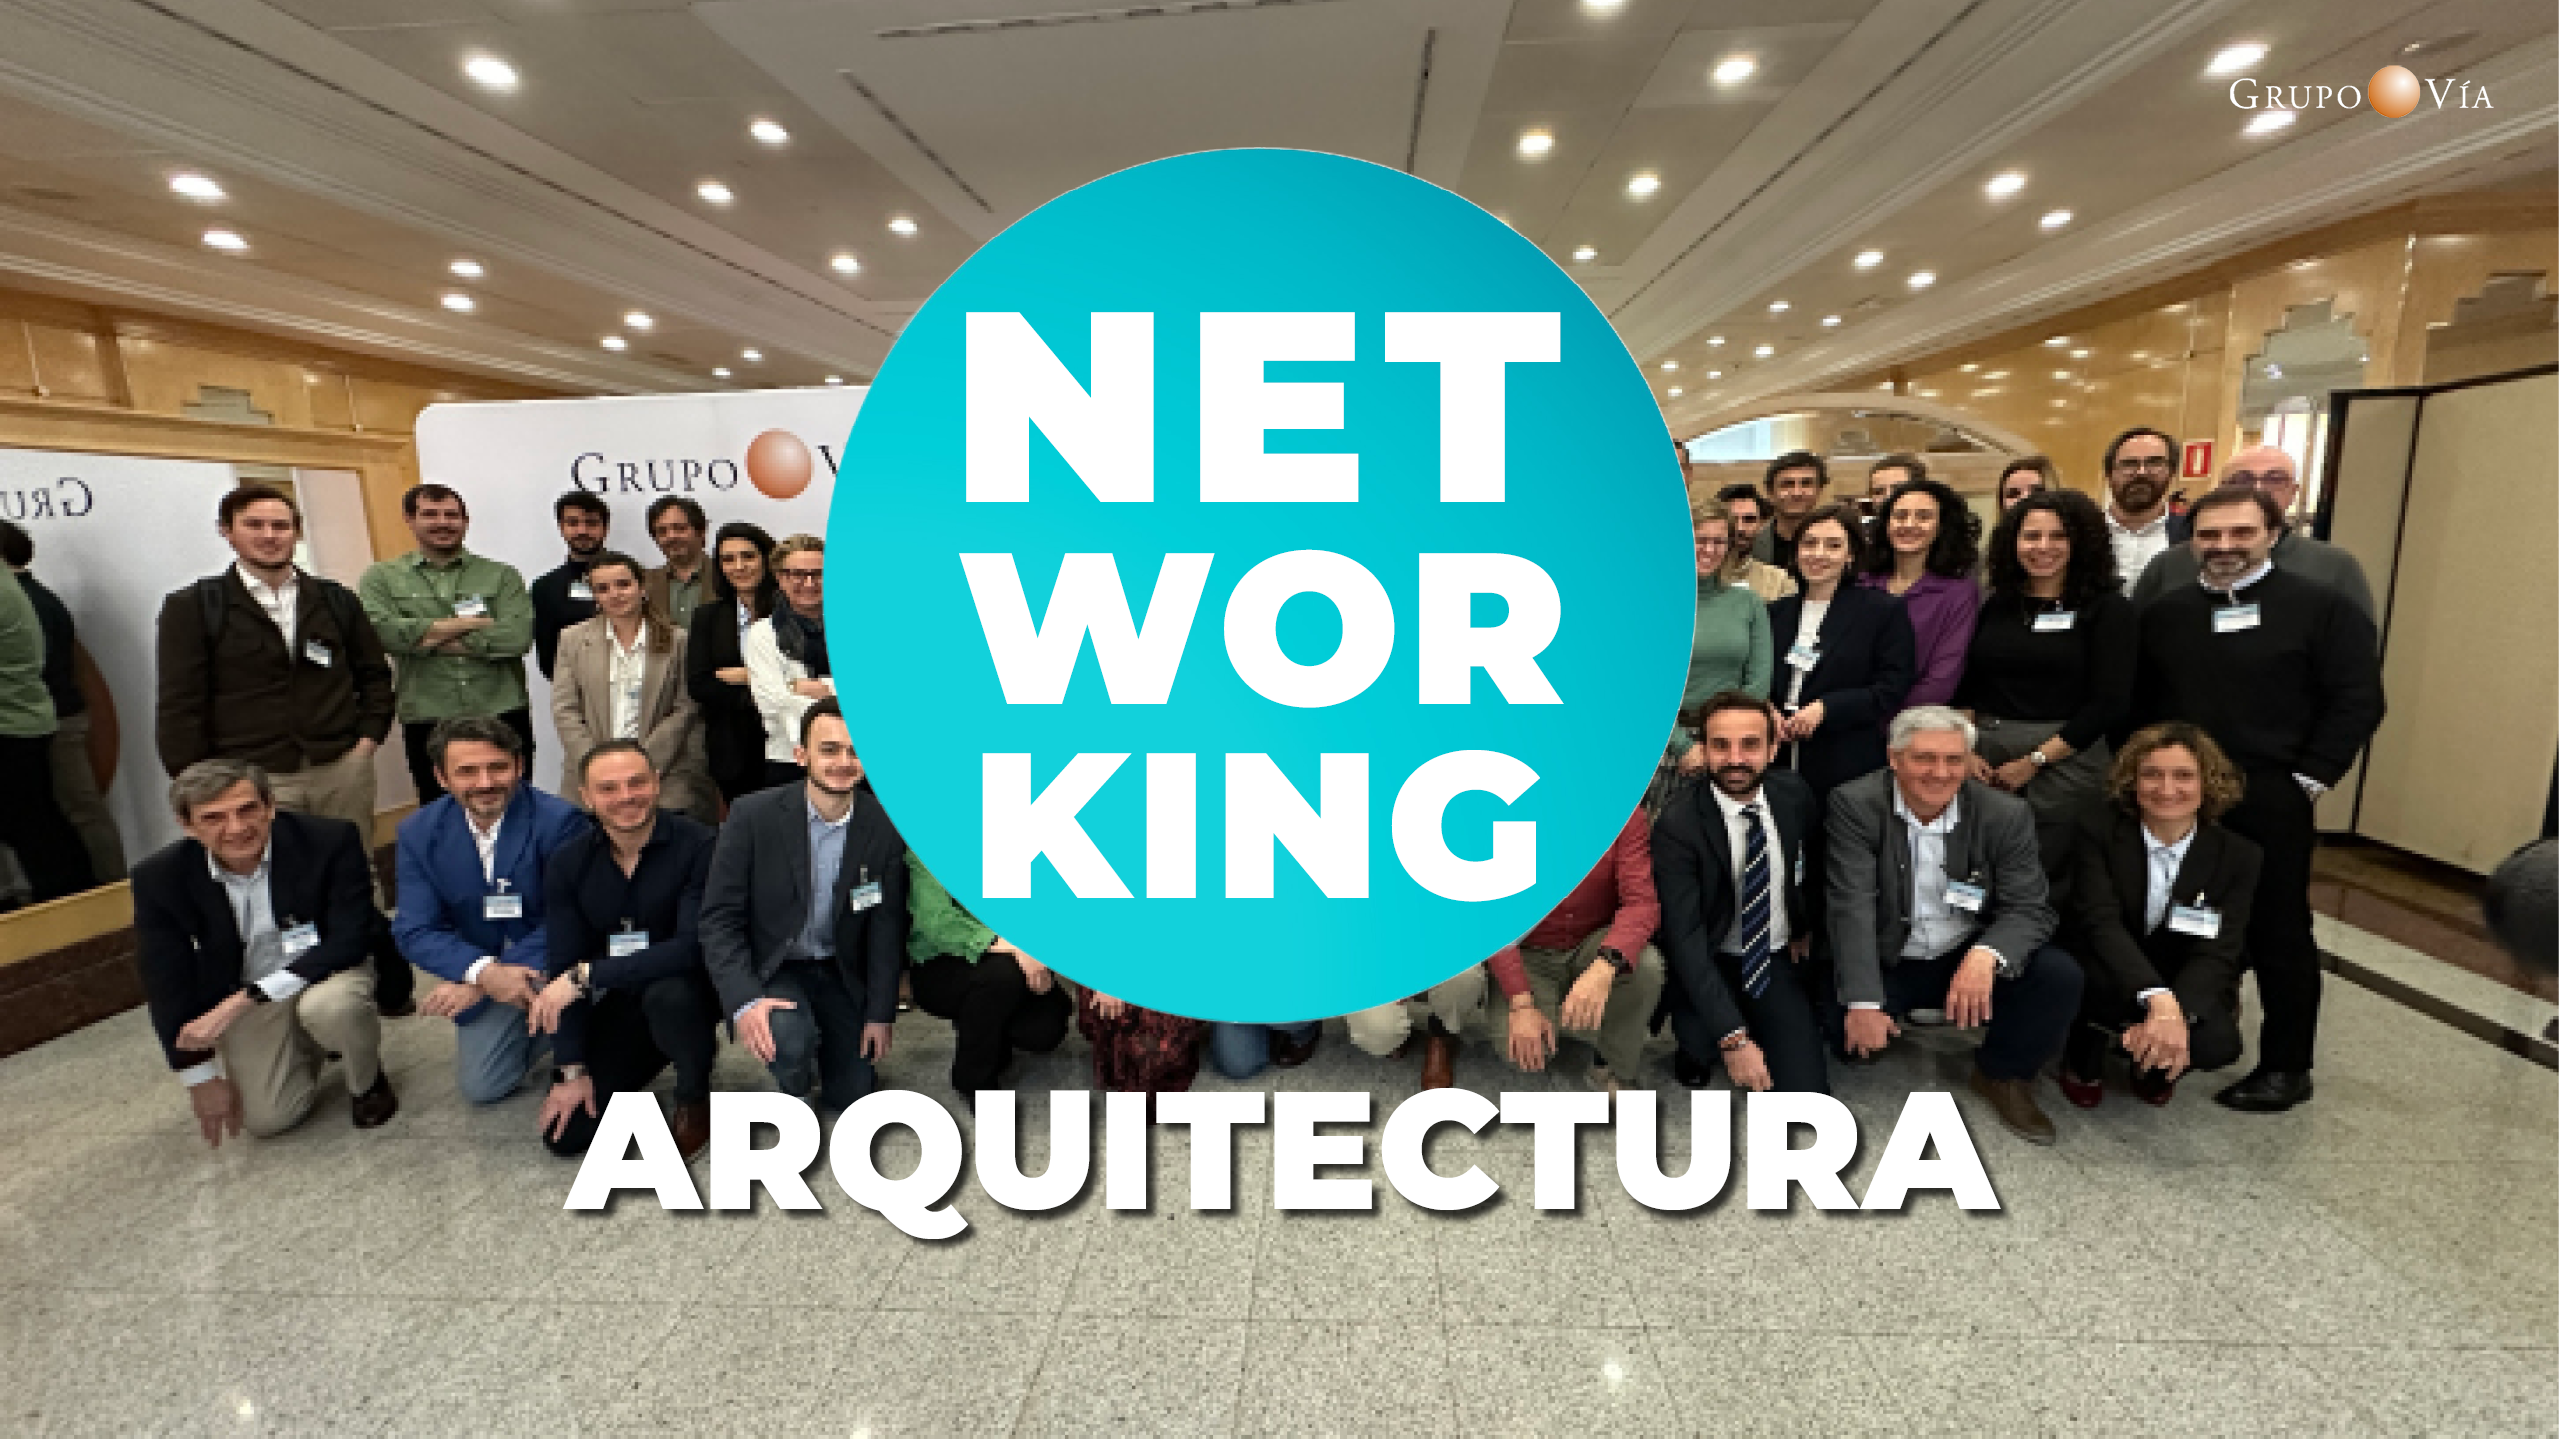 NETWORKING ARQUITECTURA MADRID v2 PRUEBA